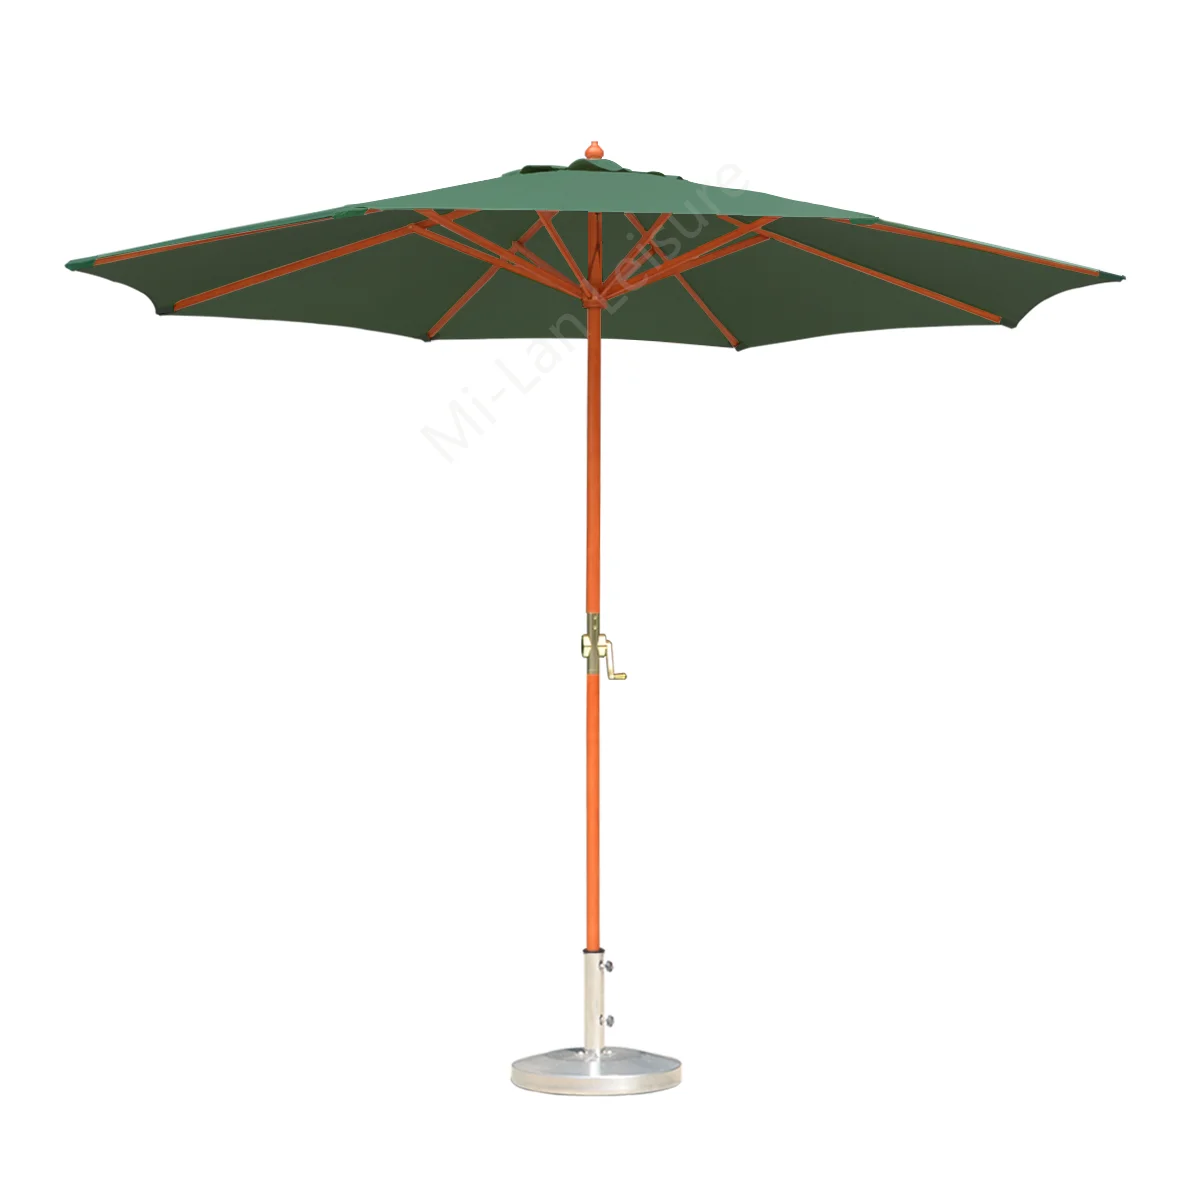 Chinese manufacturer 3M wooden outdoor cafe patio garden umbrella parasol